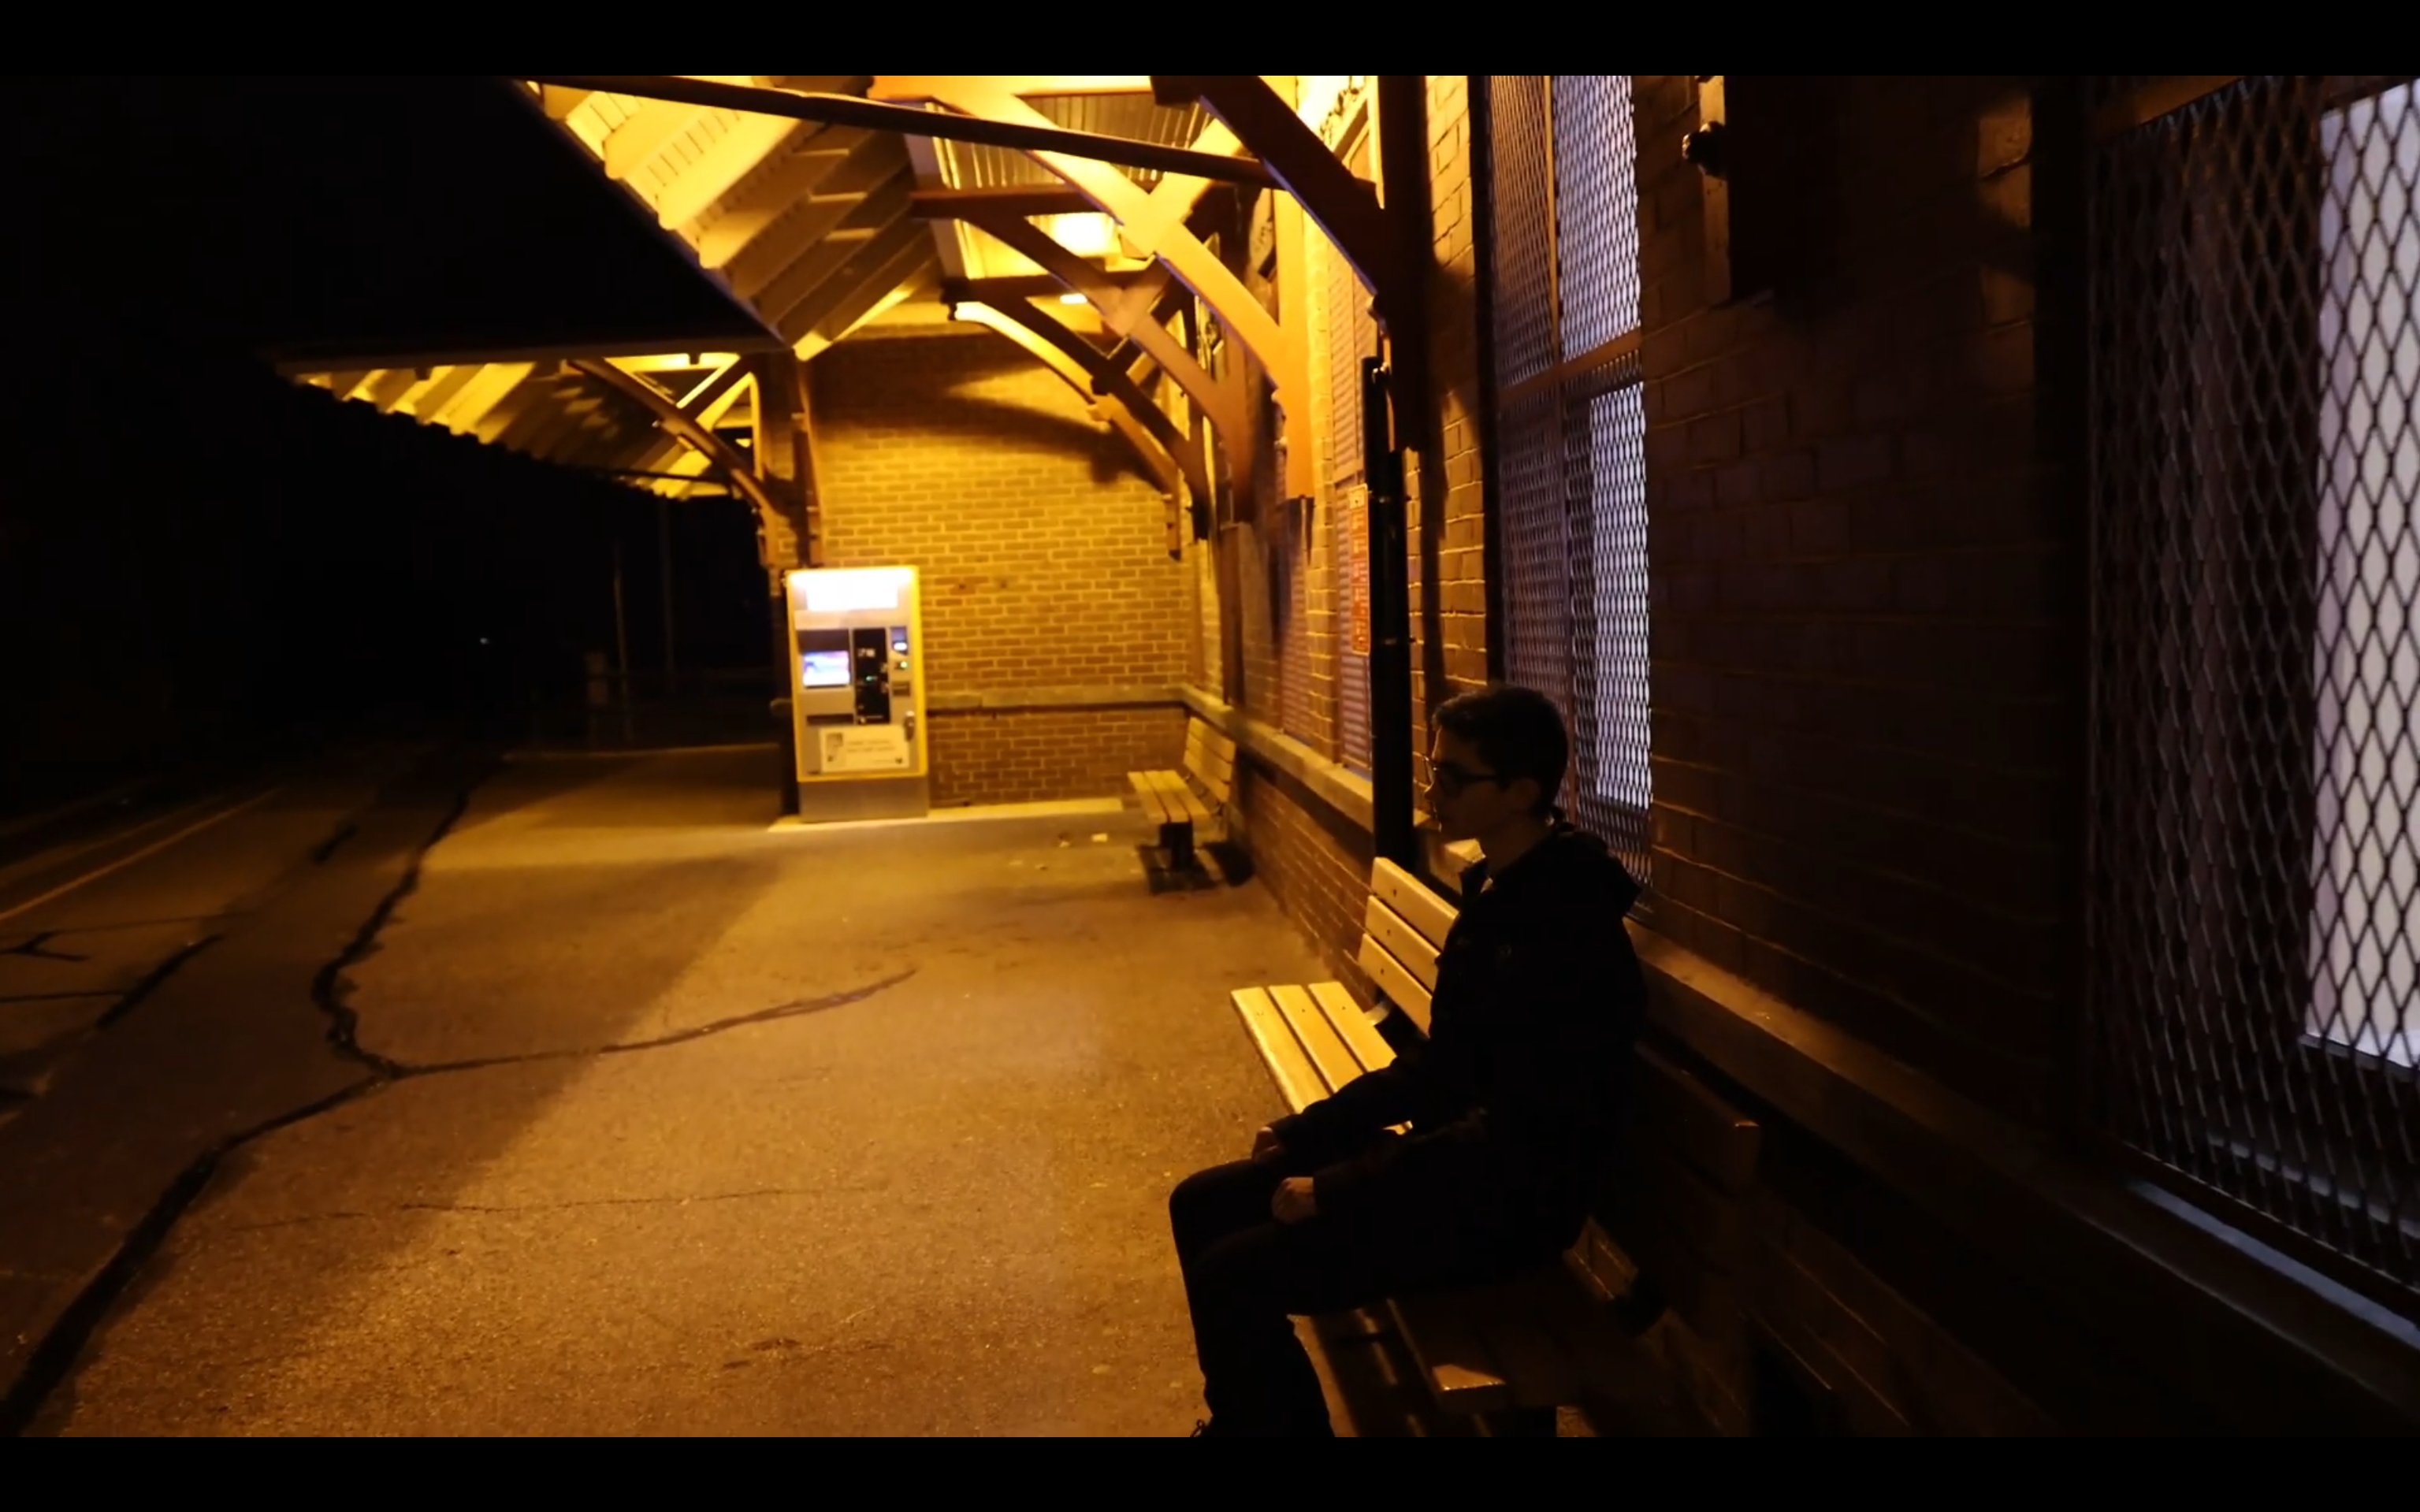 Elliott Fullam in Music Video: By The Train